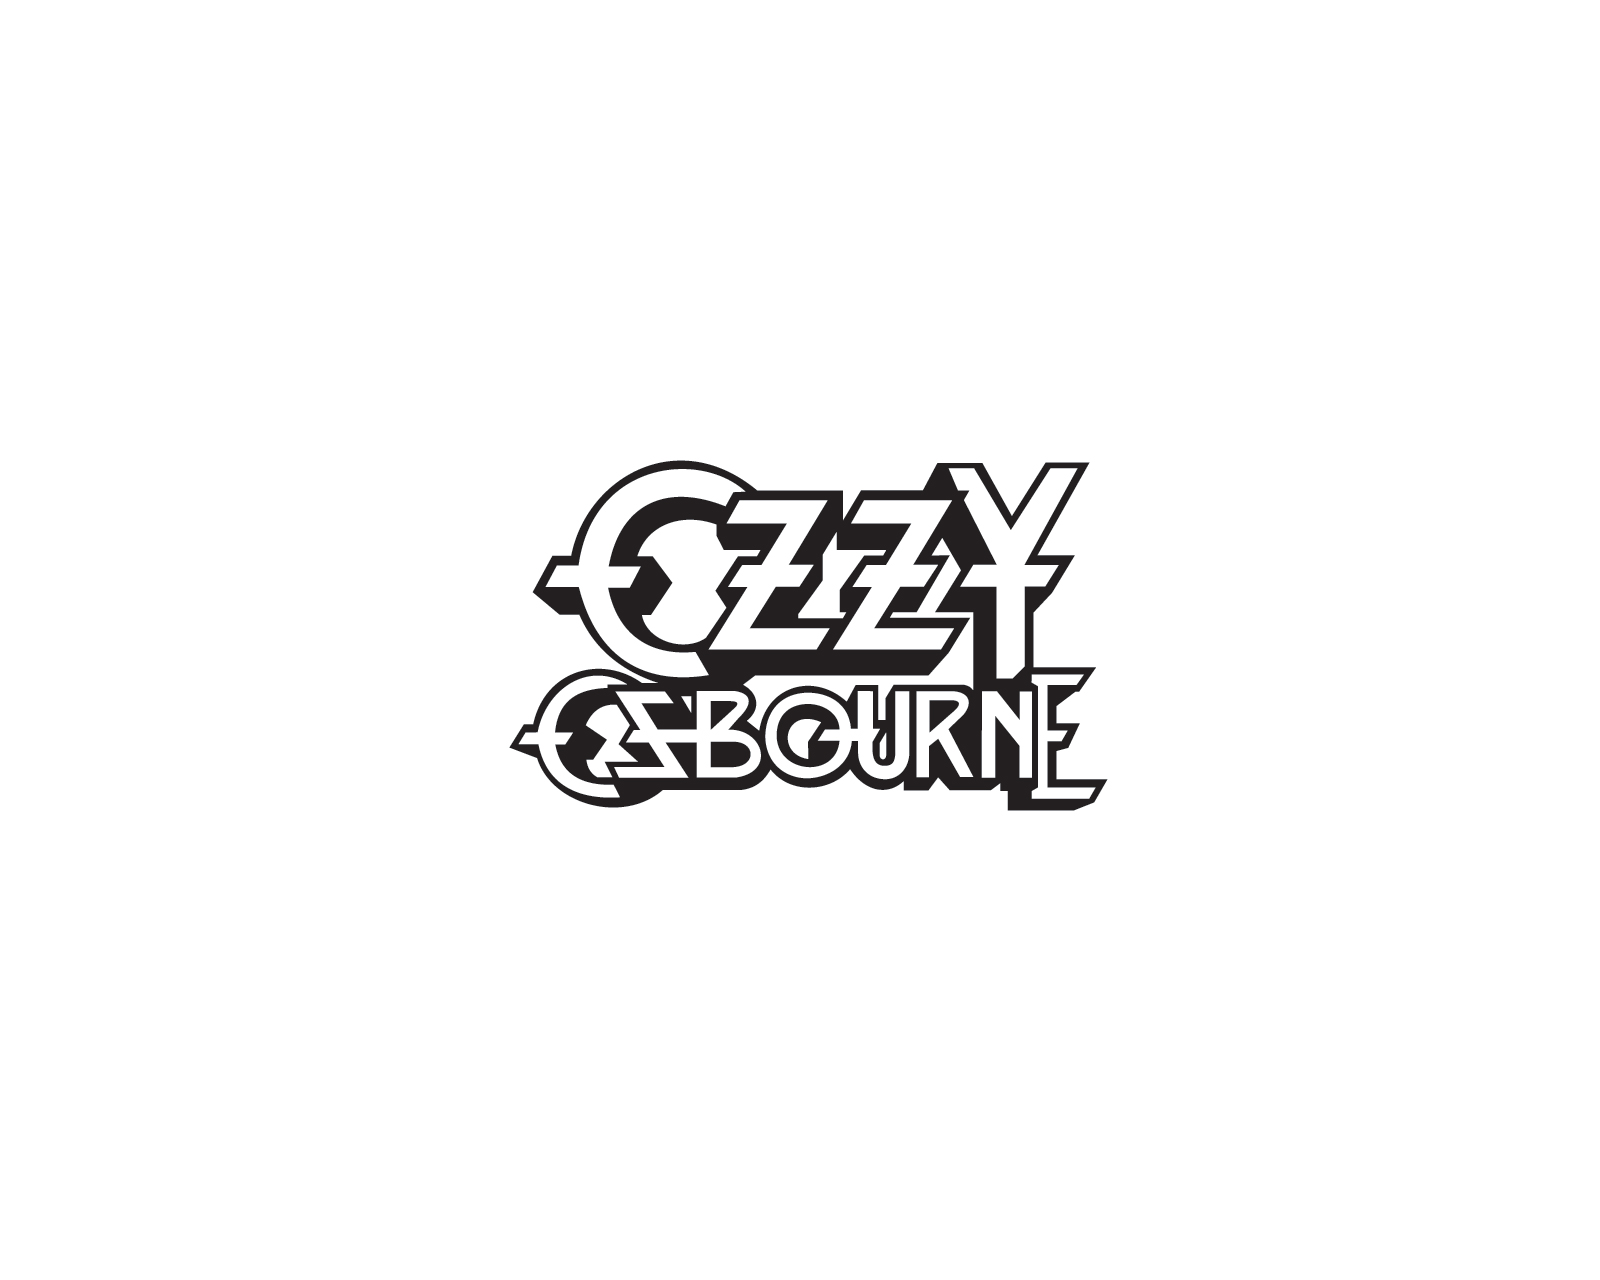 ozzy, Osbourne, Heavy, Metal, Hard, Rock, Bands, Groups, Music, Entertainment, Album, Covers Wallpaper